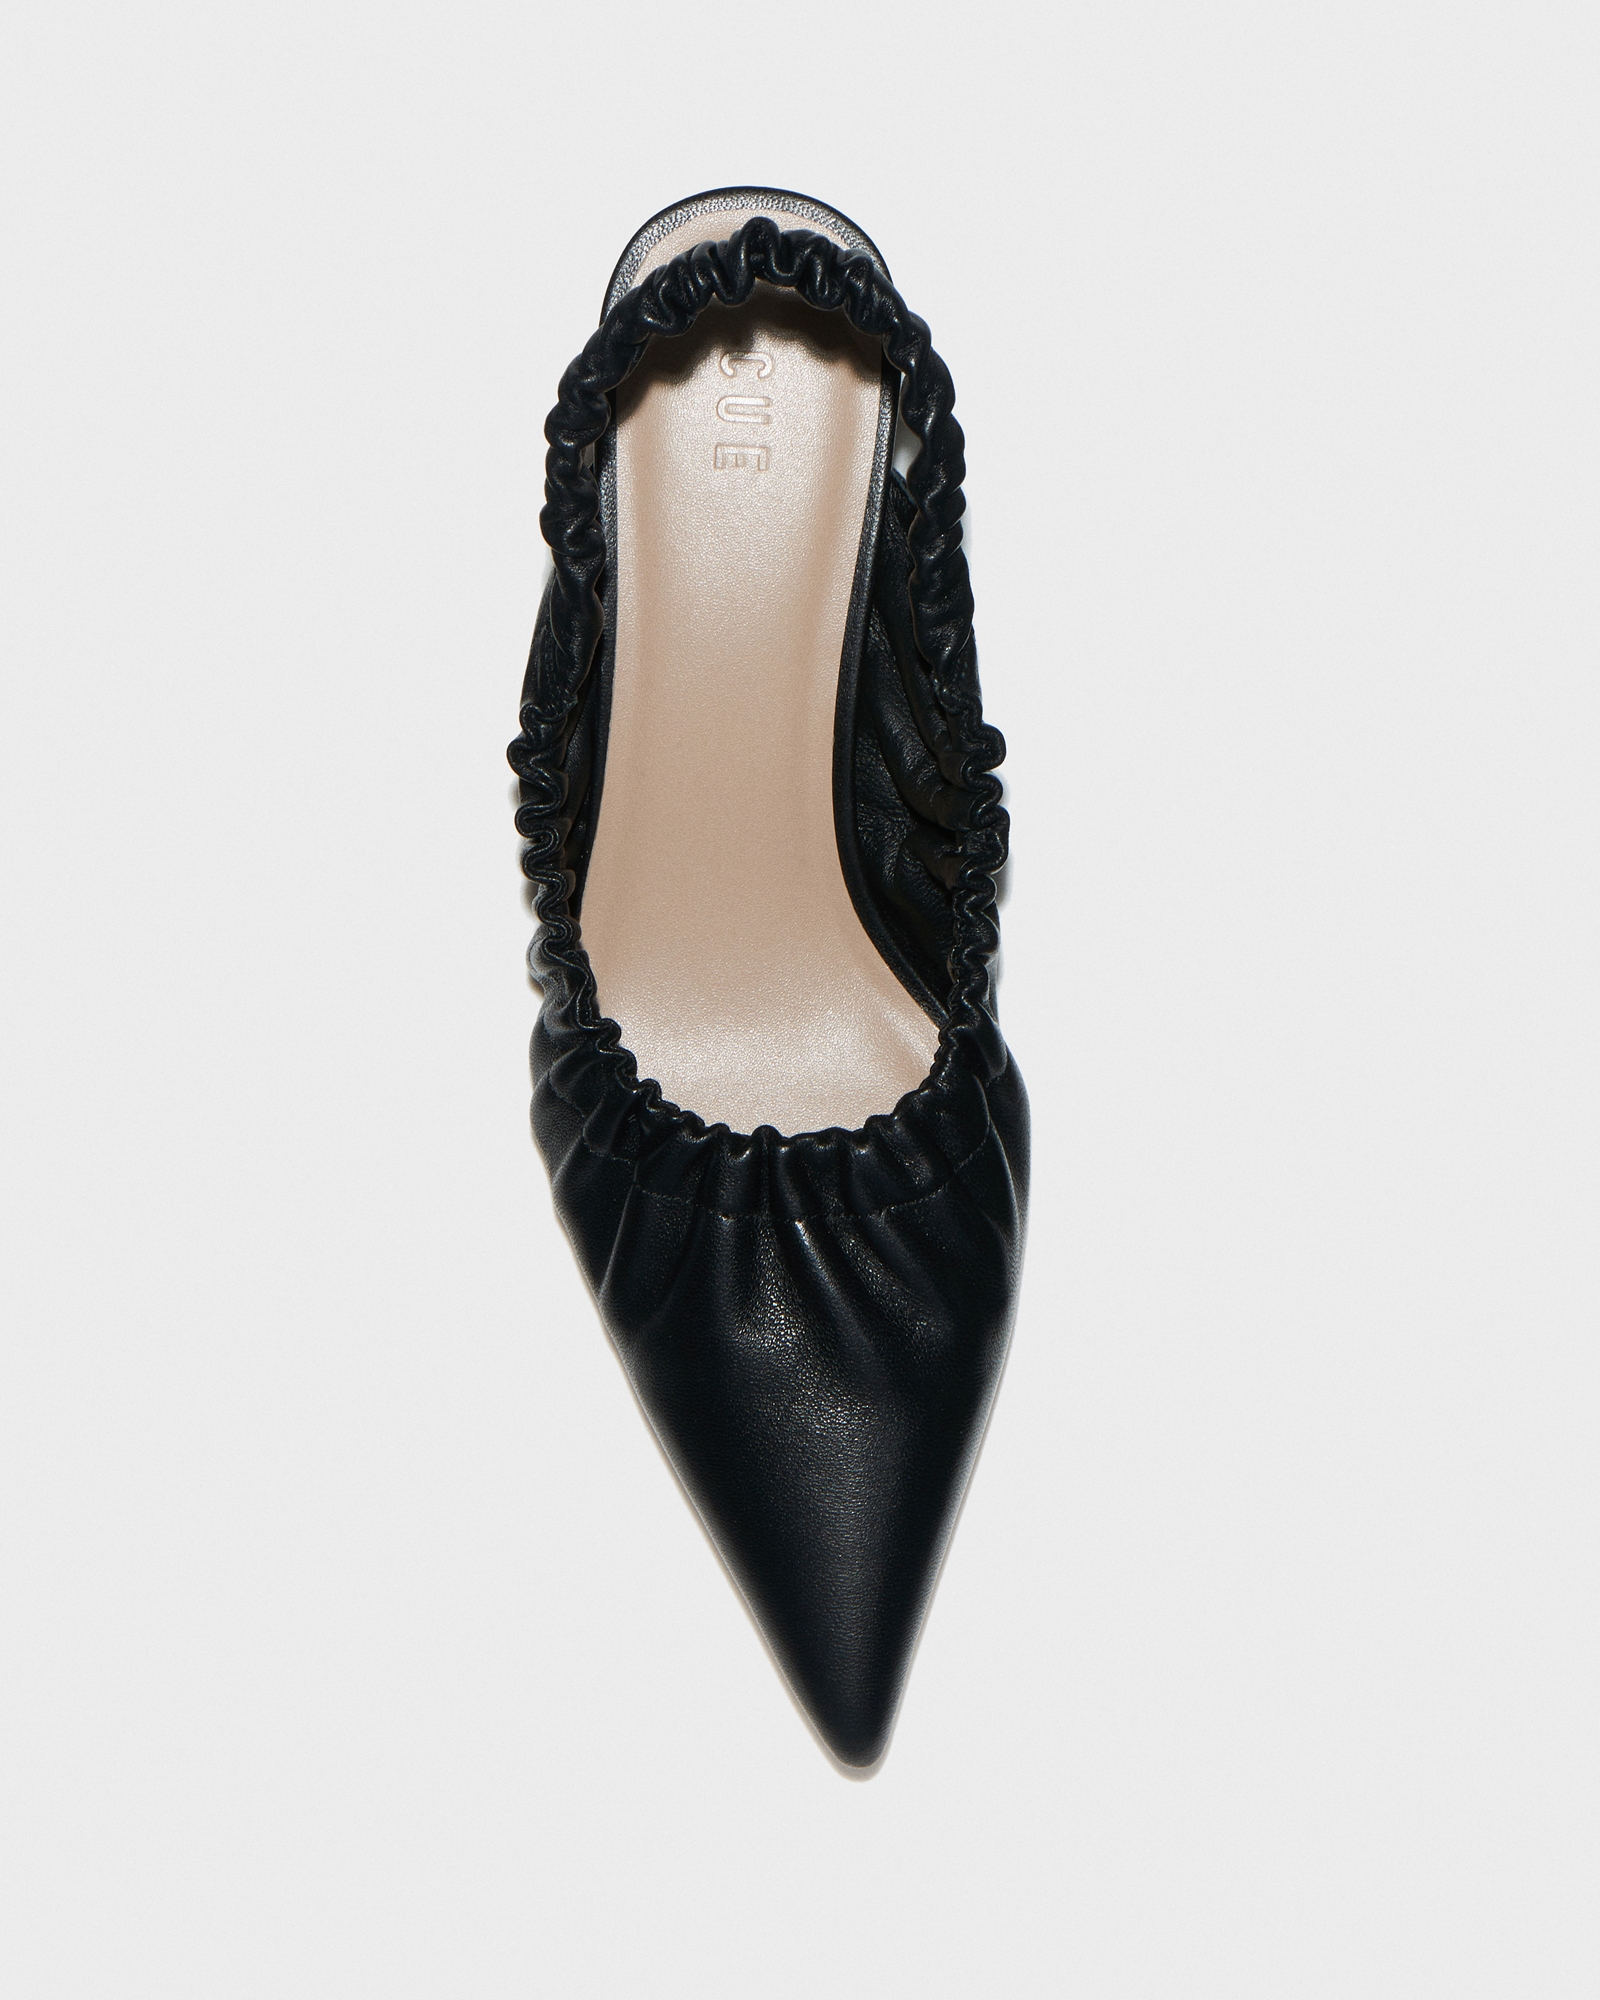 Accessories | Leather Slingback Heel | 990 Black